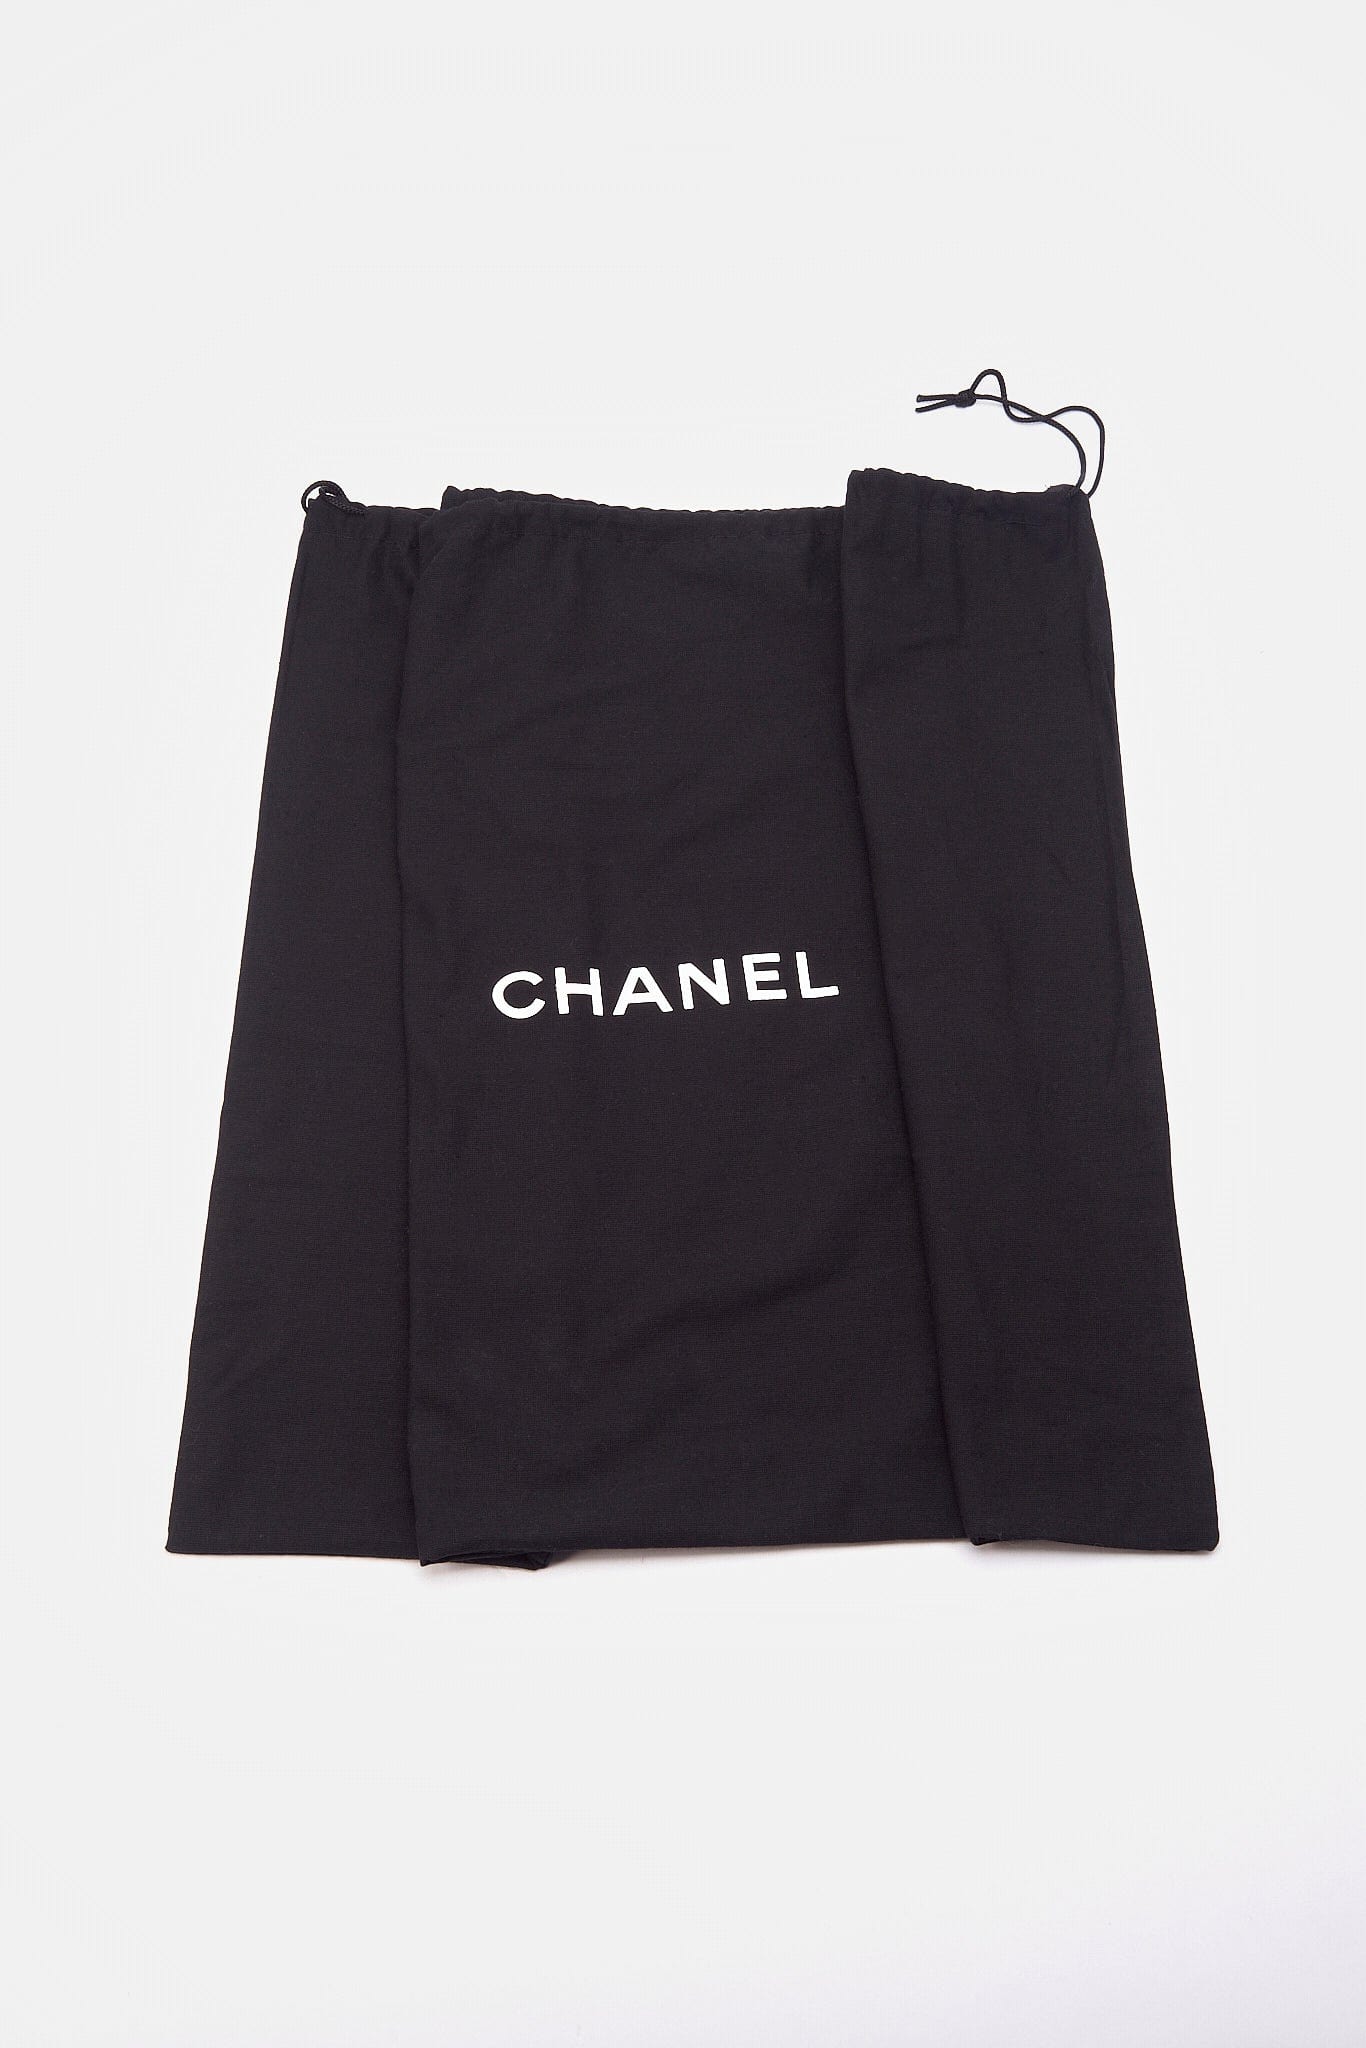 Chanel Paris Biarritz Nylon Tote Bag